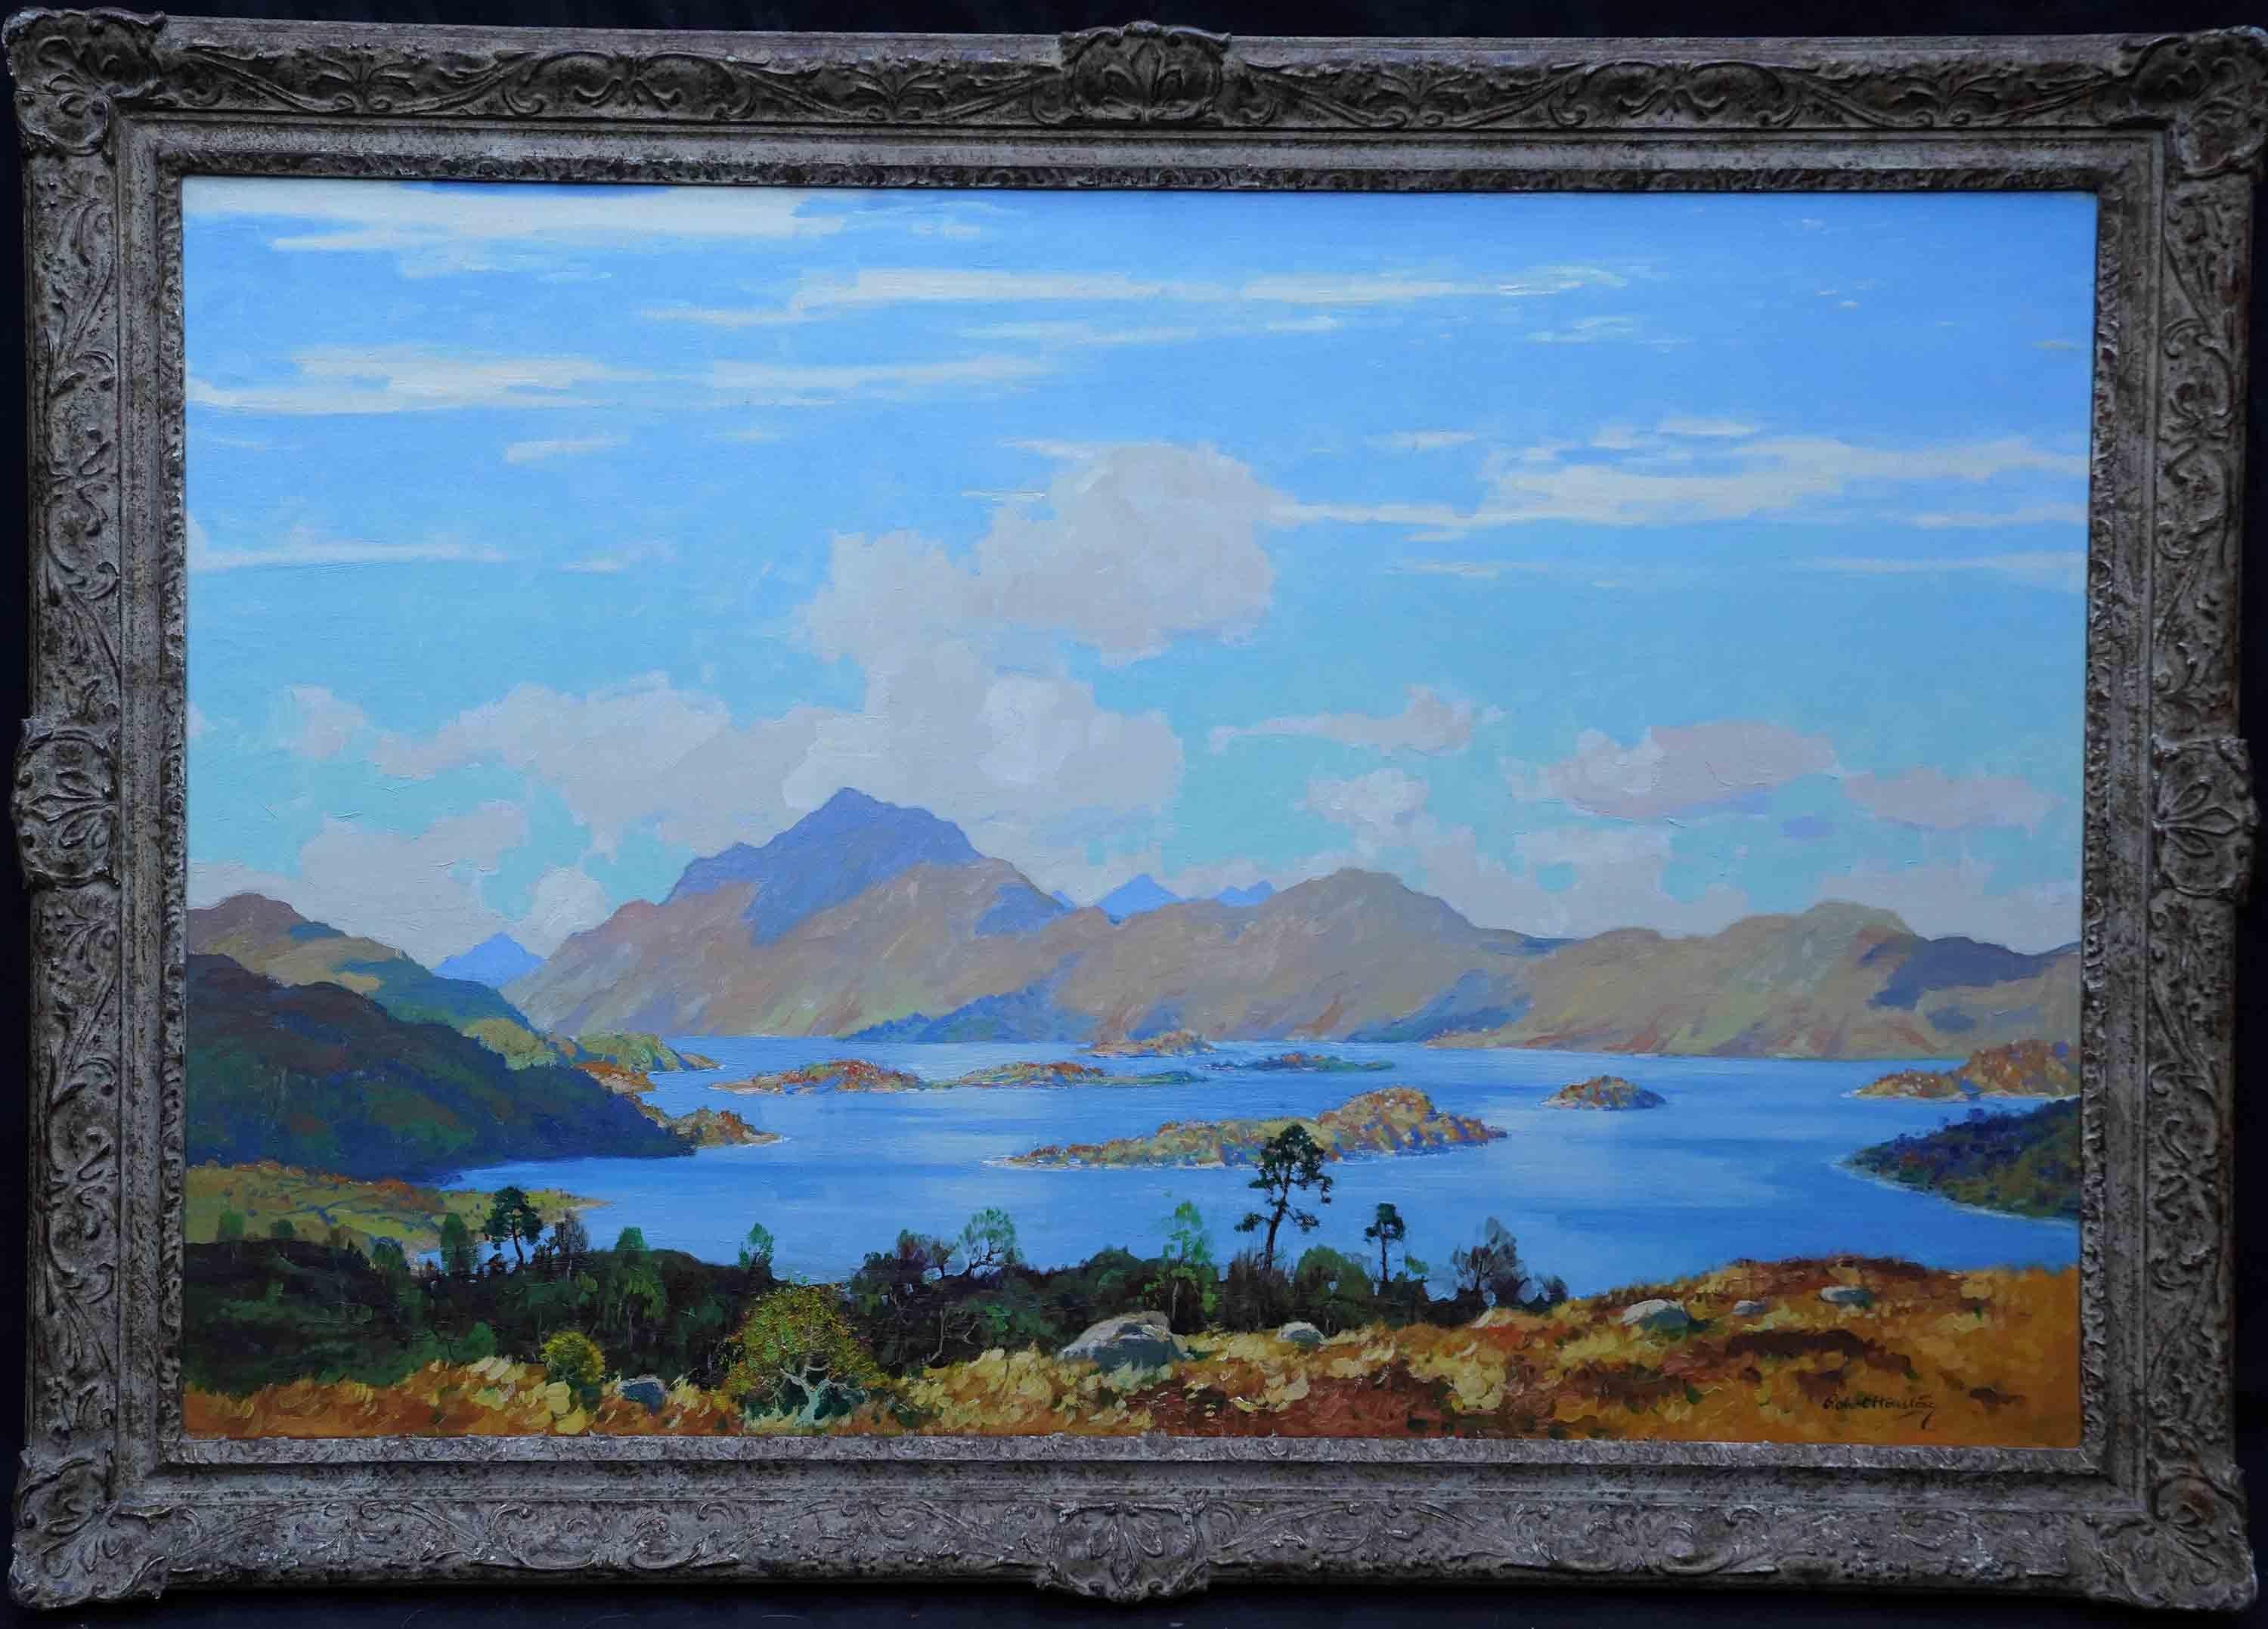 Robert Houston Landscape Painting - Loch Lomond Scotland - Scottish exhibited art landscape oil painting